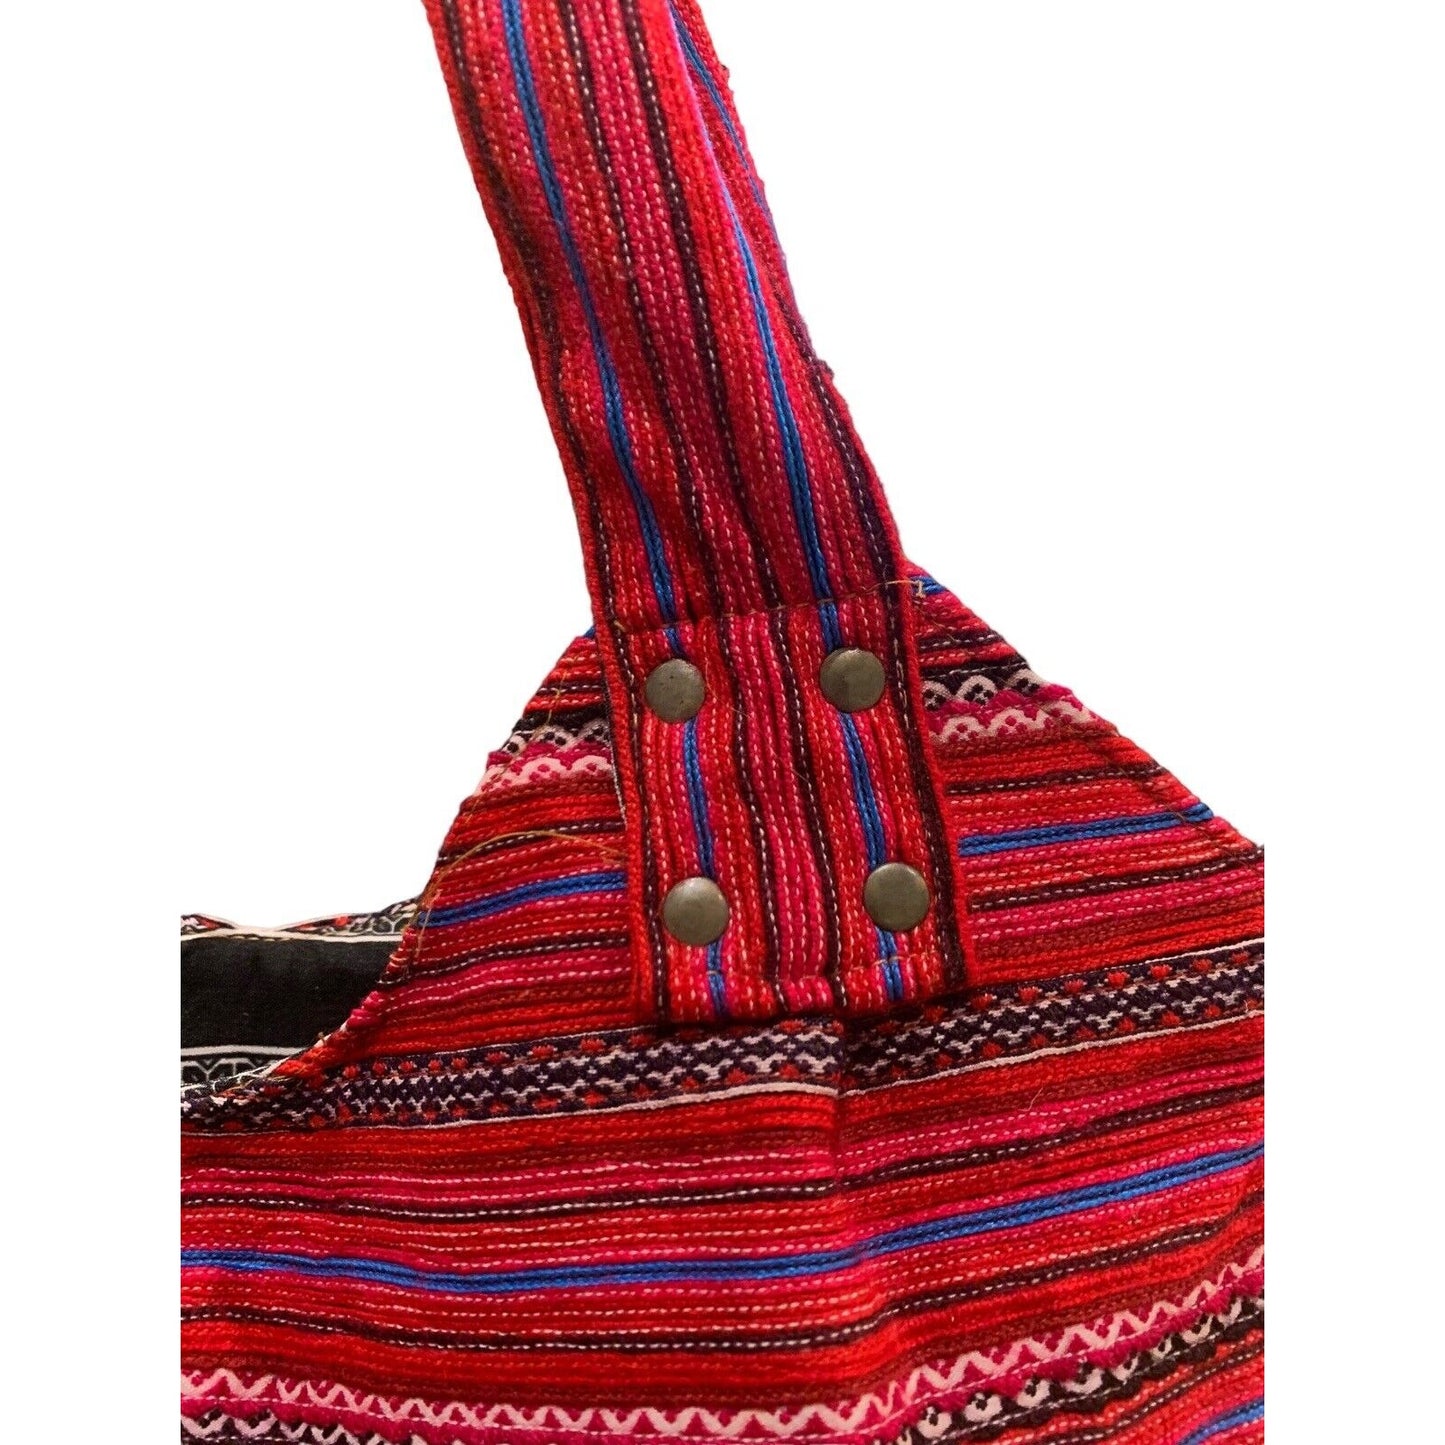 Textured Fabric Structured Hobo Sac Handbag